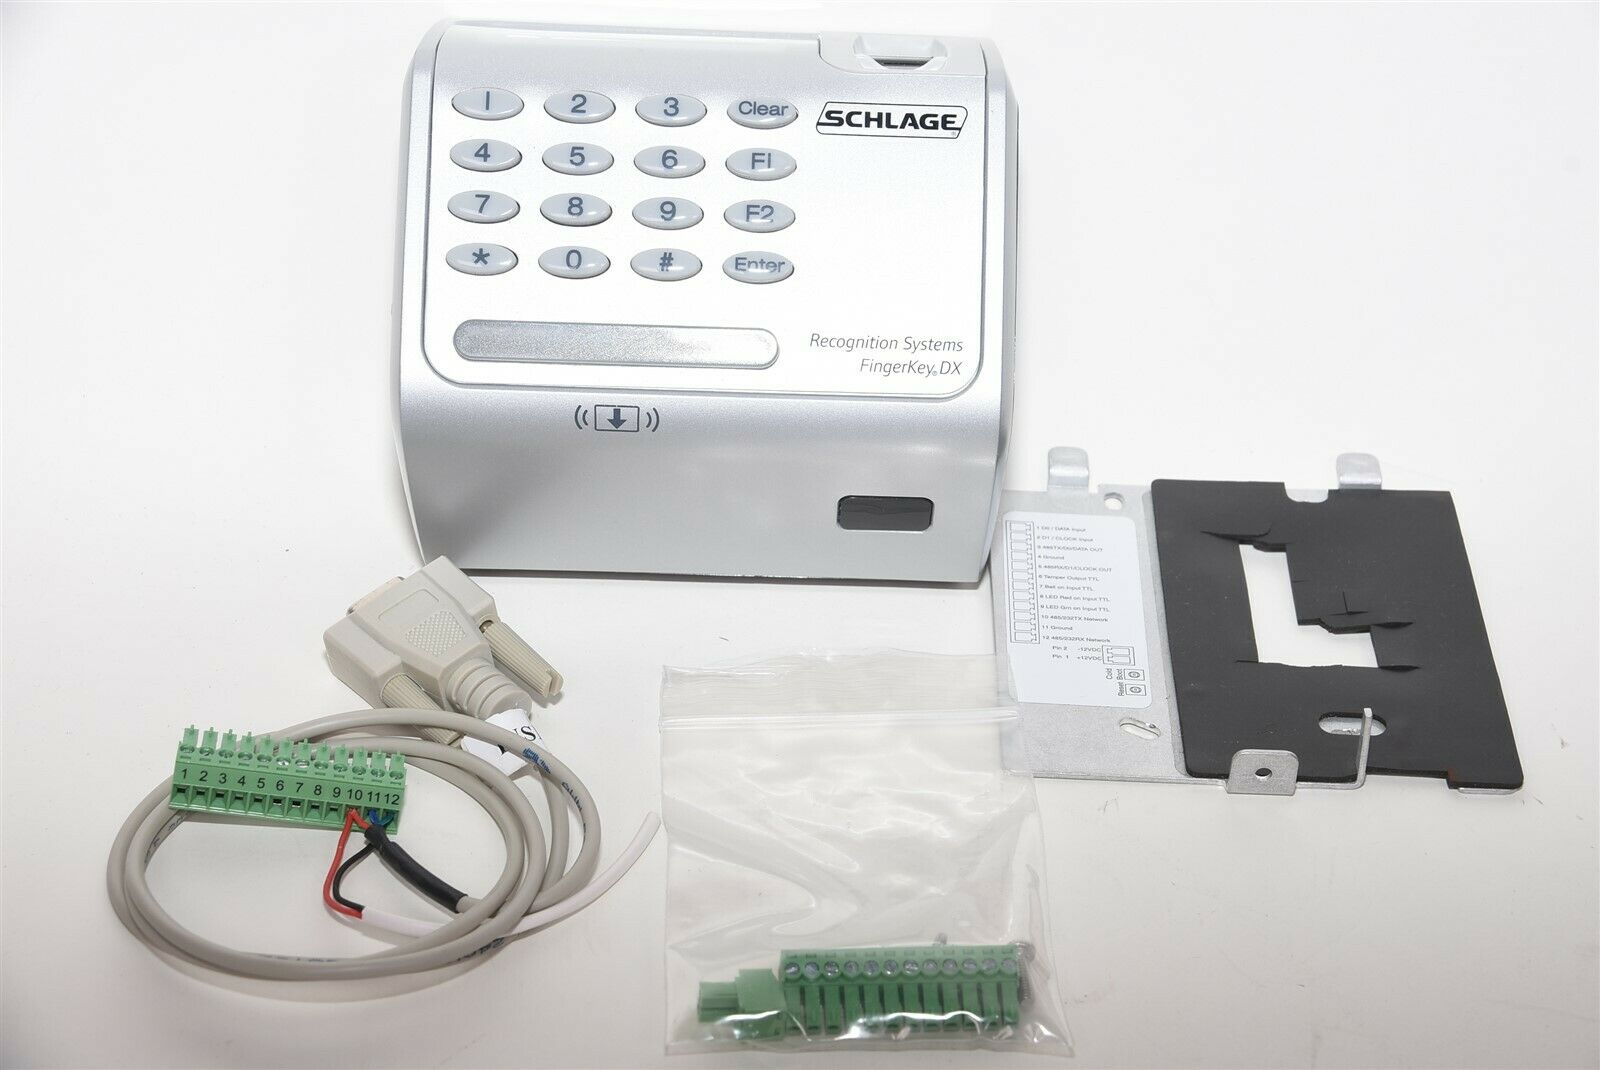 Schlage Ir Recognition Fingerkey Dx-2000 Biometric Finger Print Scanner Reader